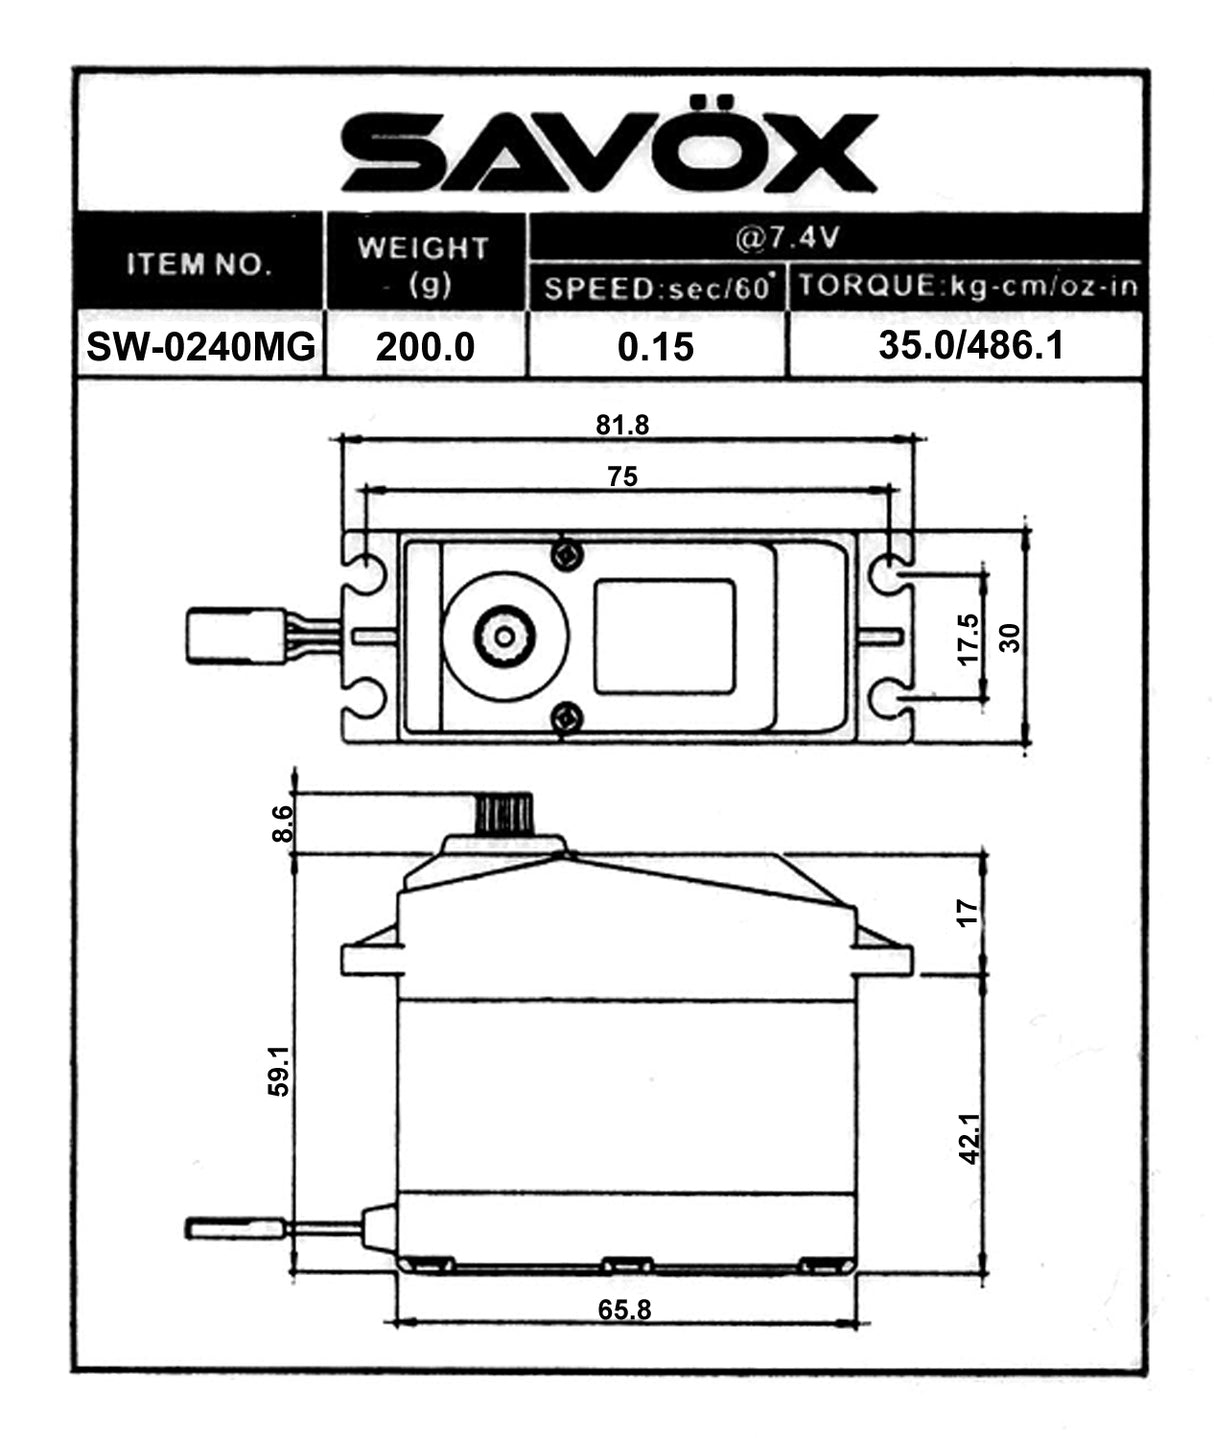 Savox SW-0240MG "Super Speed" Waterproof Digital 1/5 Scale Servo (High Voltage)